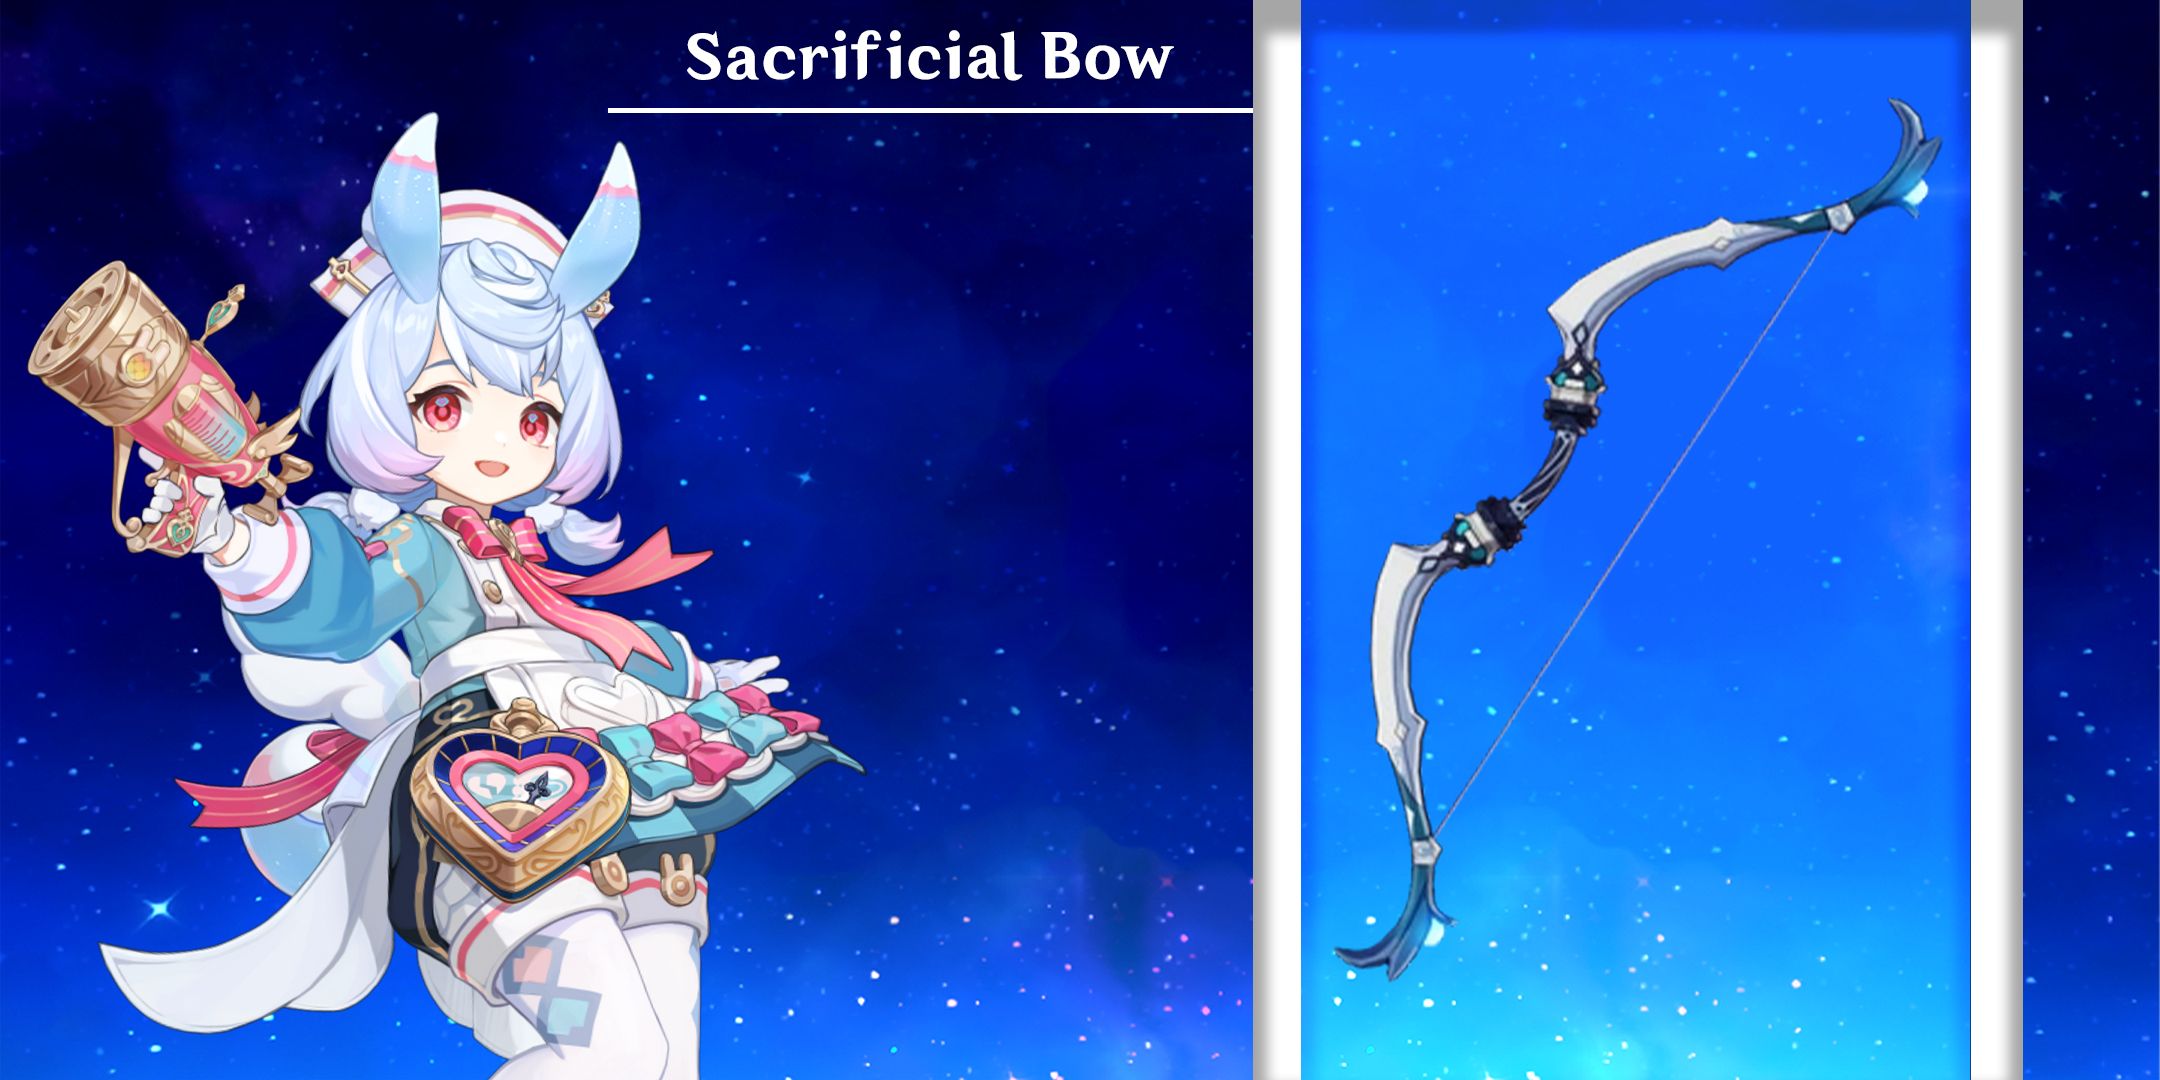 genshin impact sigewinne using sacrificial bow-1